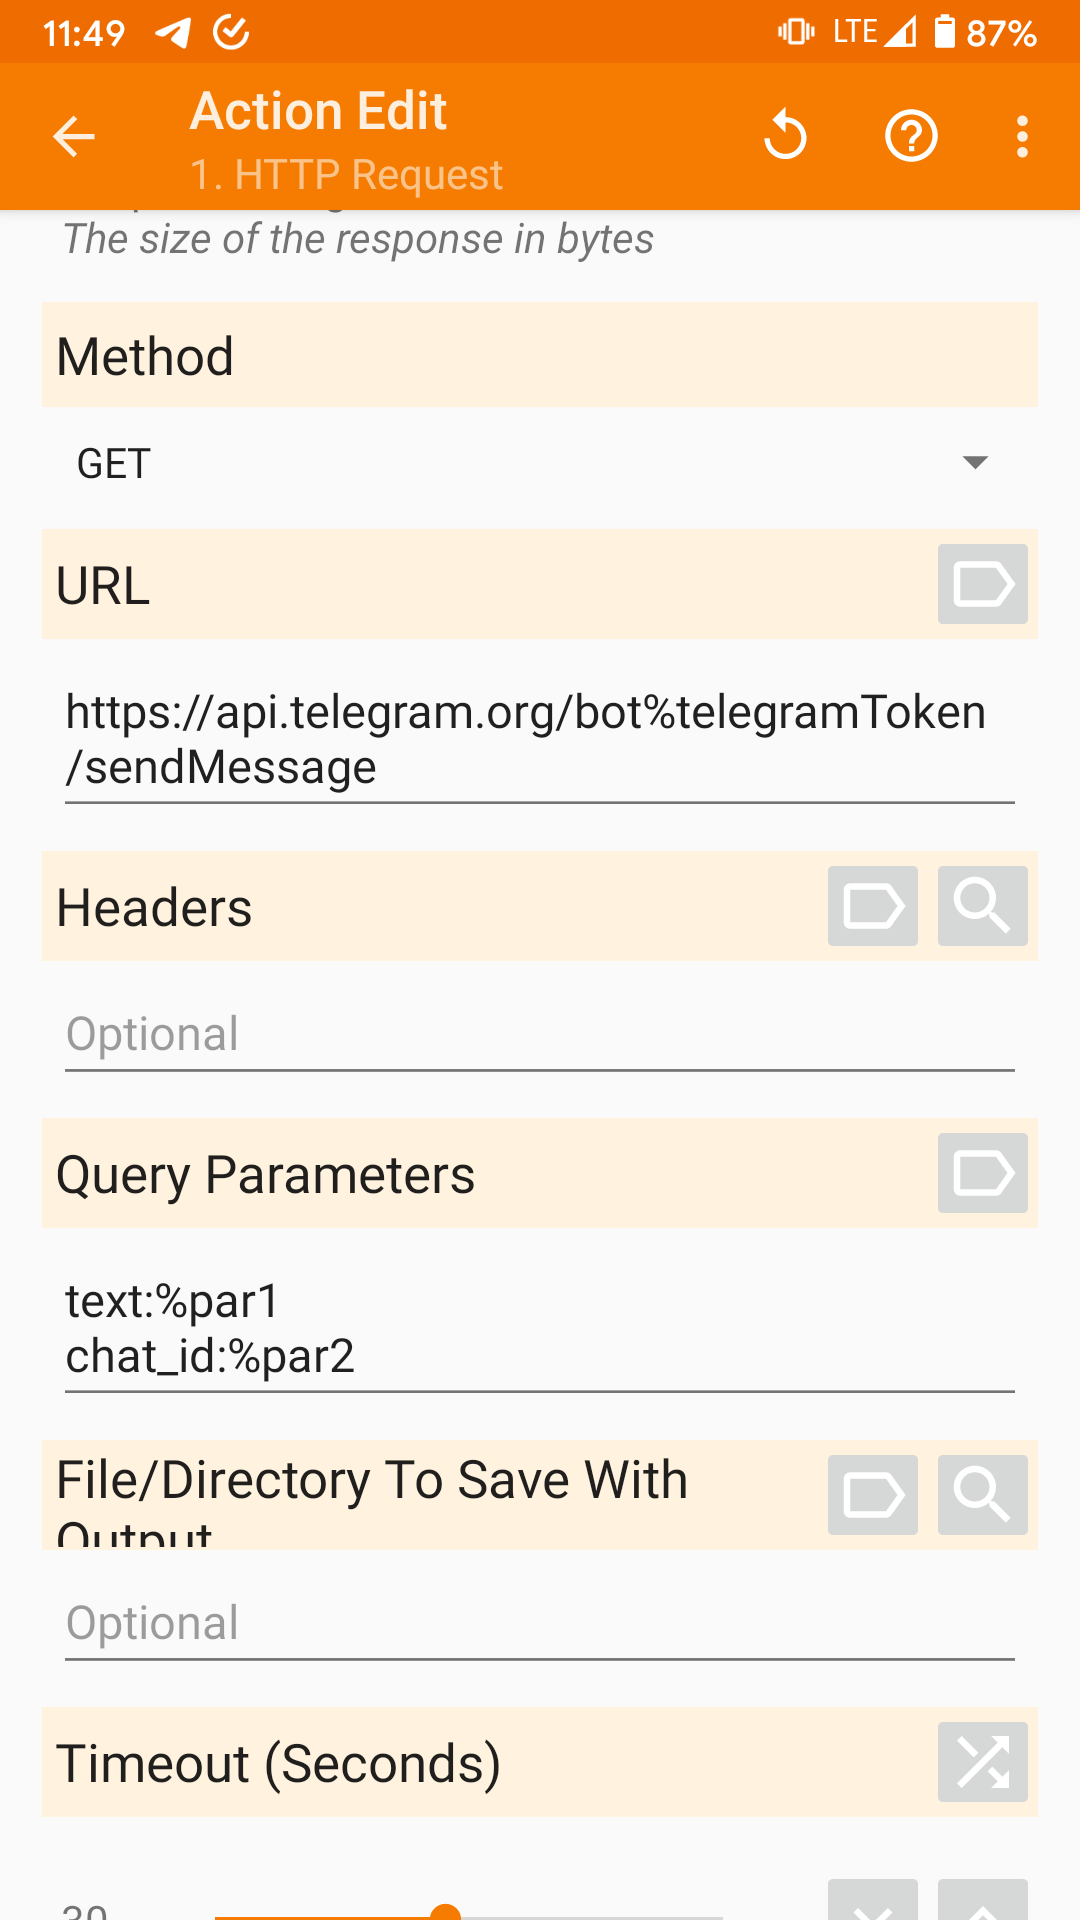 Tasker and Telegram Integration. Today, I'll explain how to send… | by  Alberto Piras | Geek Culture | Medium